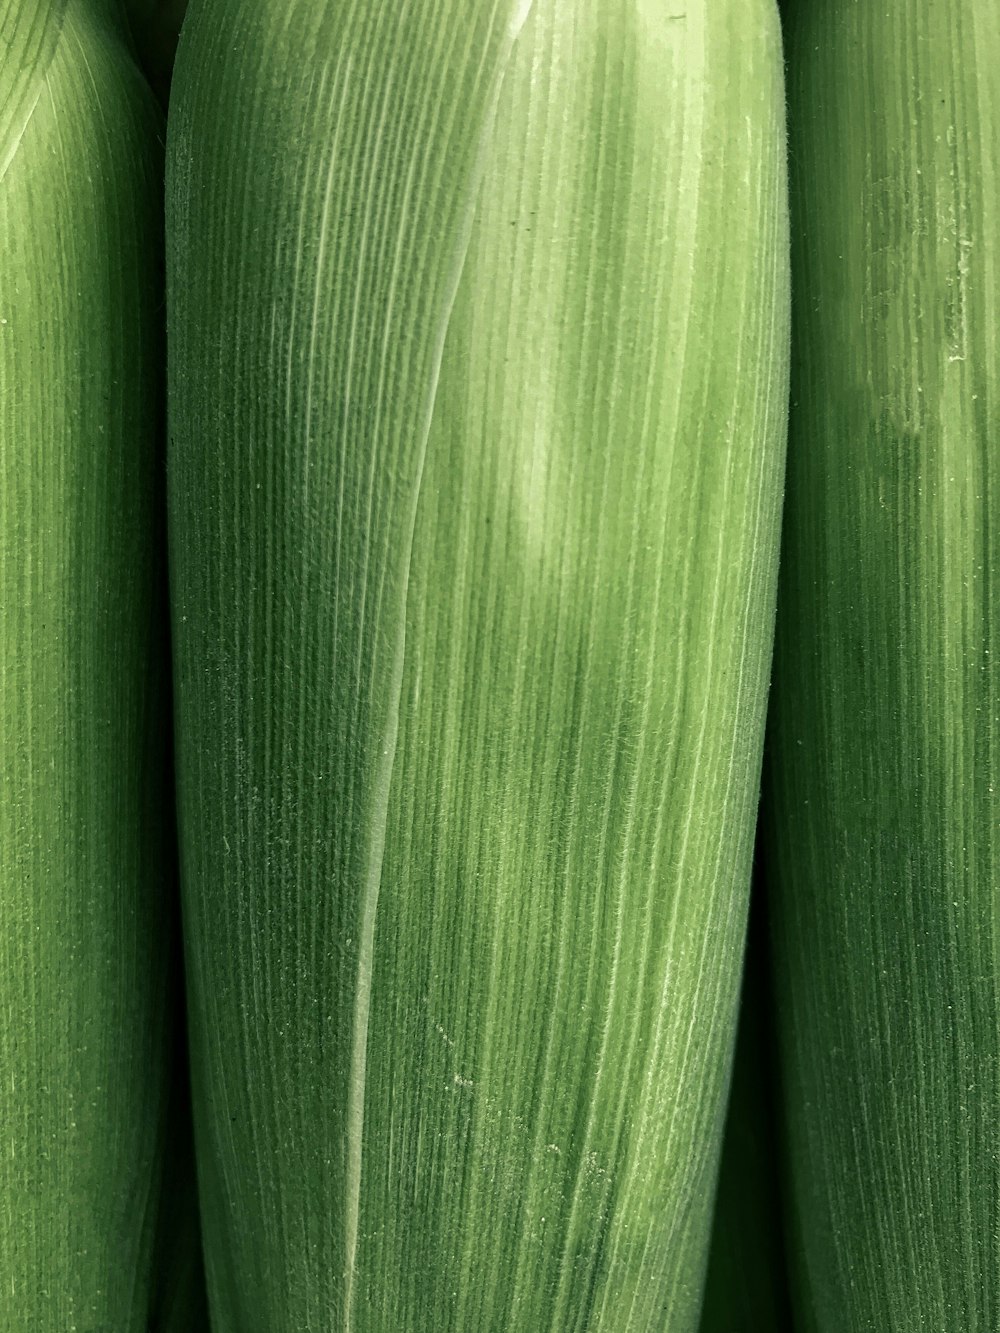 green corn husks